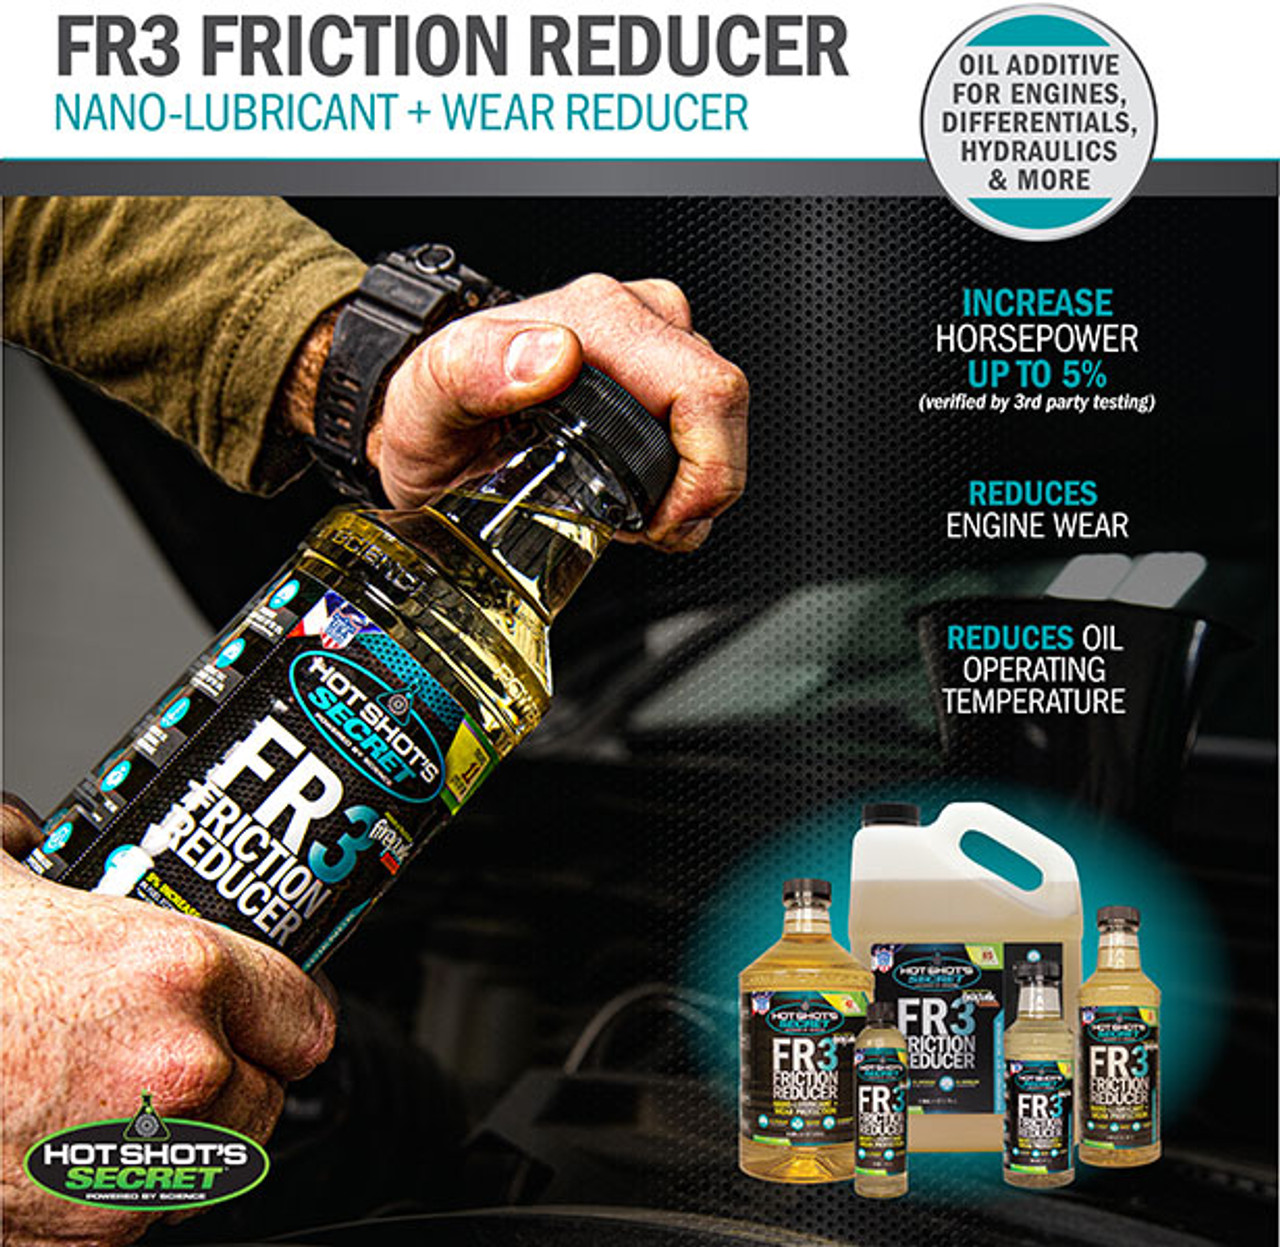 FR3 Friction Reducer by Hot Shot's Secret High Quality Oil Friction Reducer